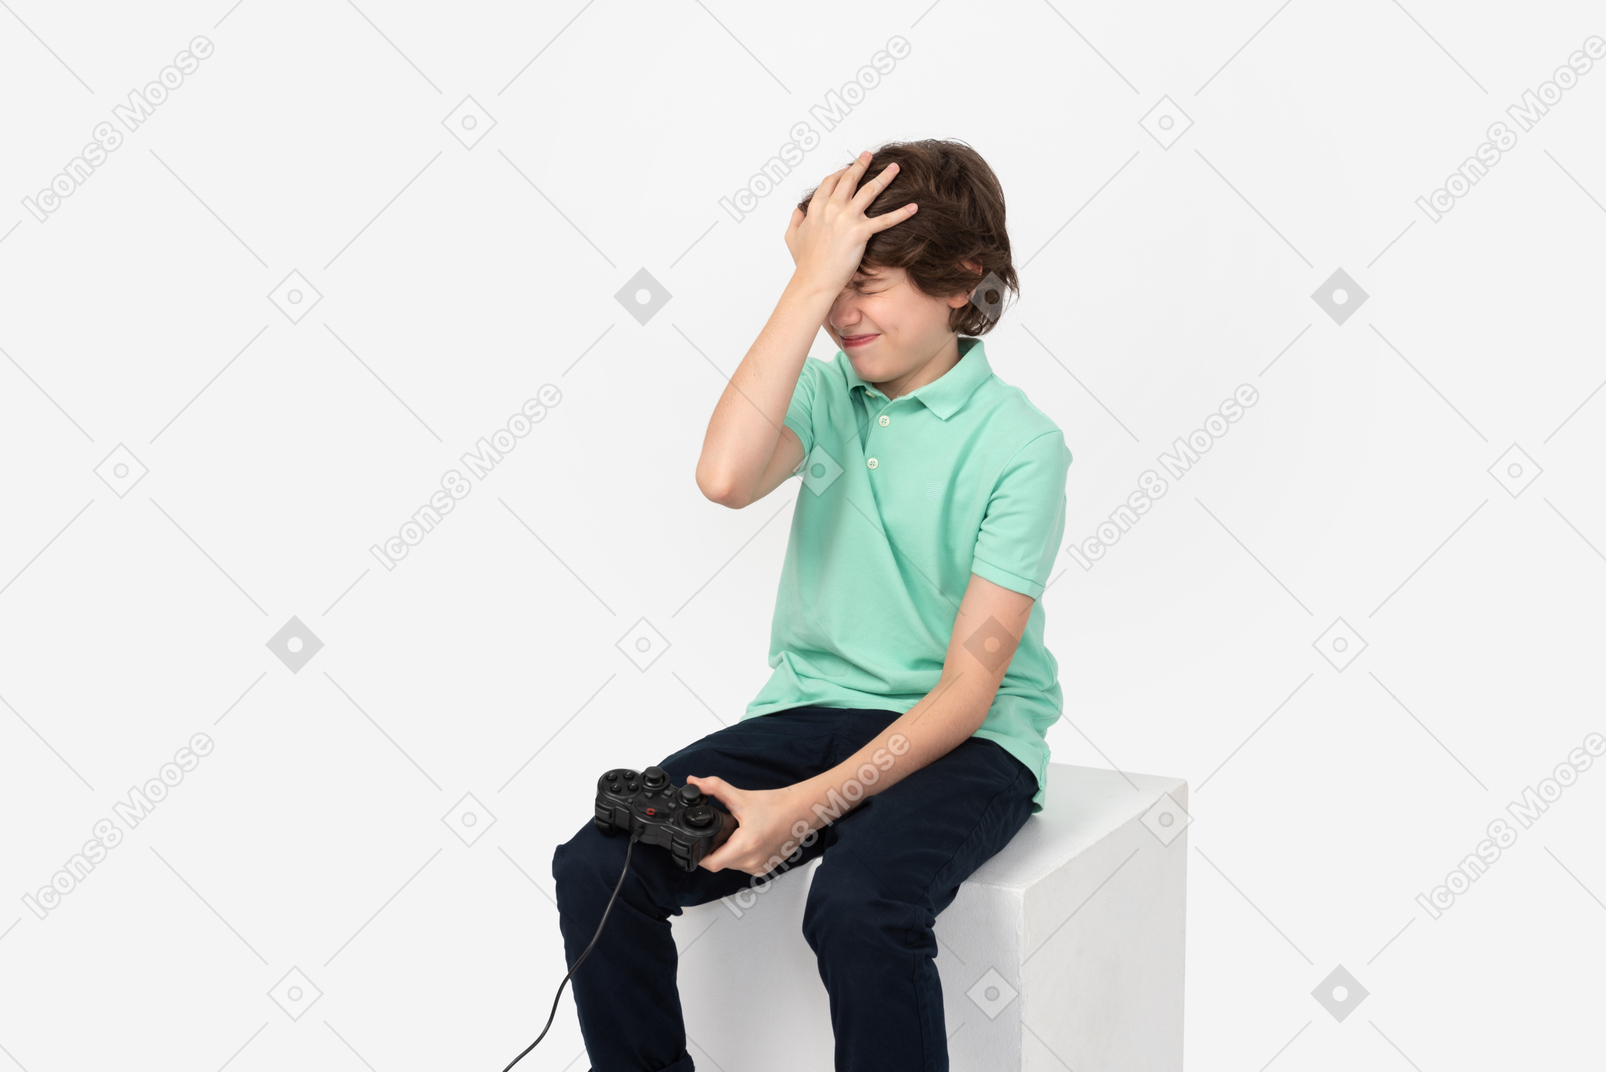 Cute boy playing video game